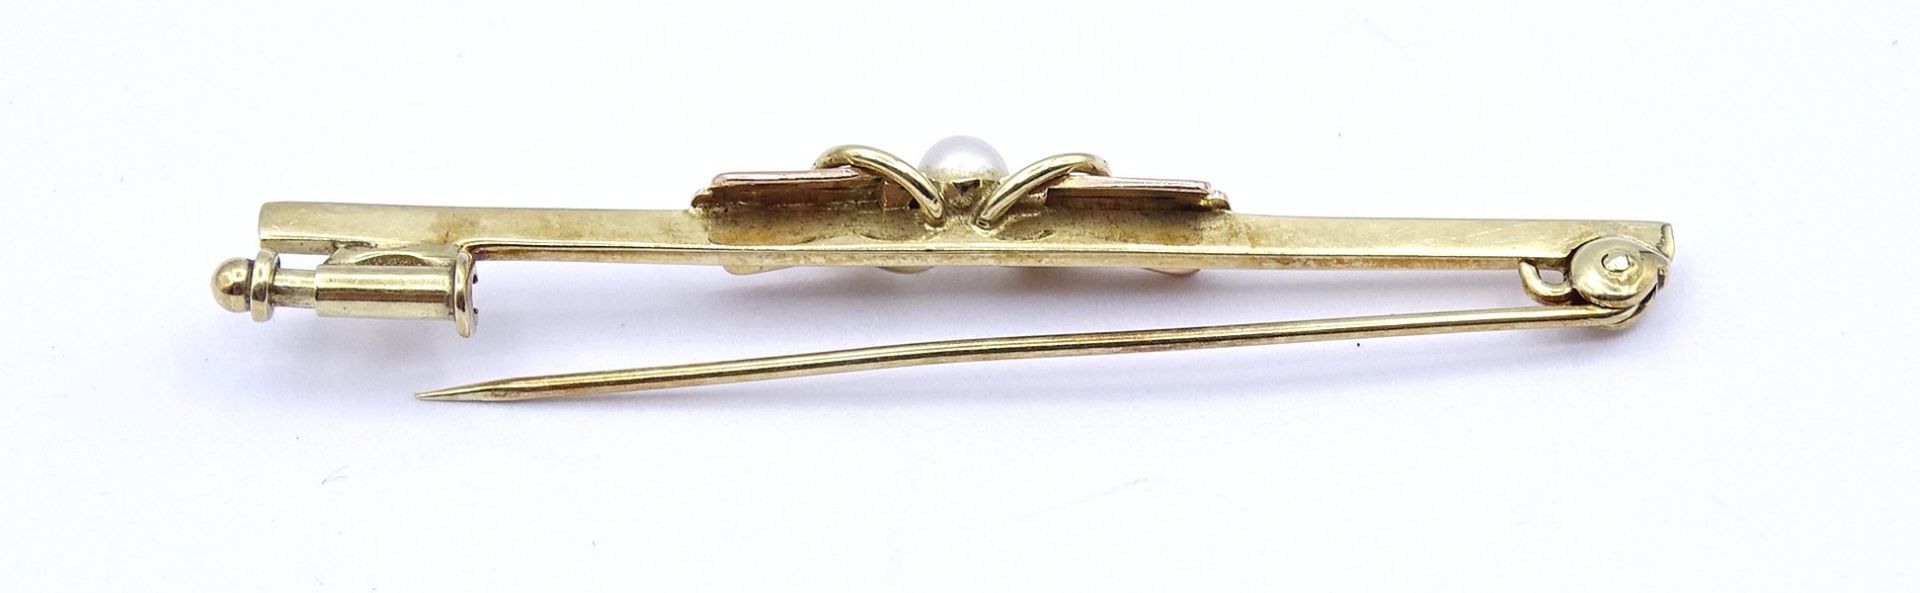 Stabbrosche mit Perle, Gold 0.585, L. 5,2cm, 2,9g. - Image 4 of 4